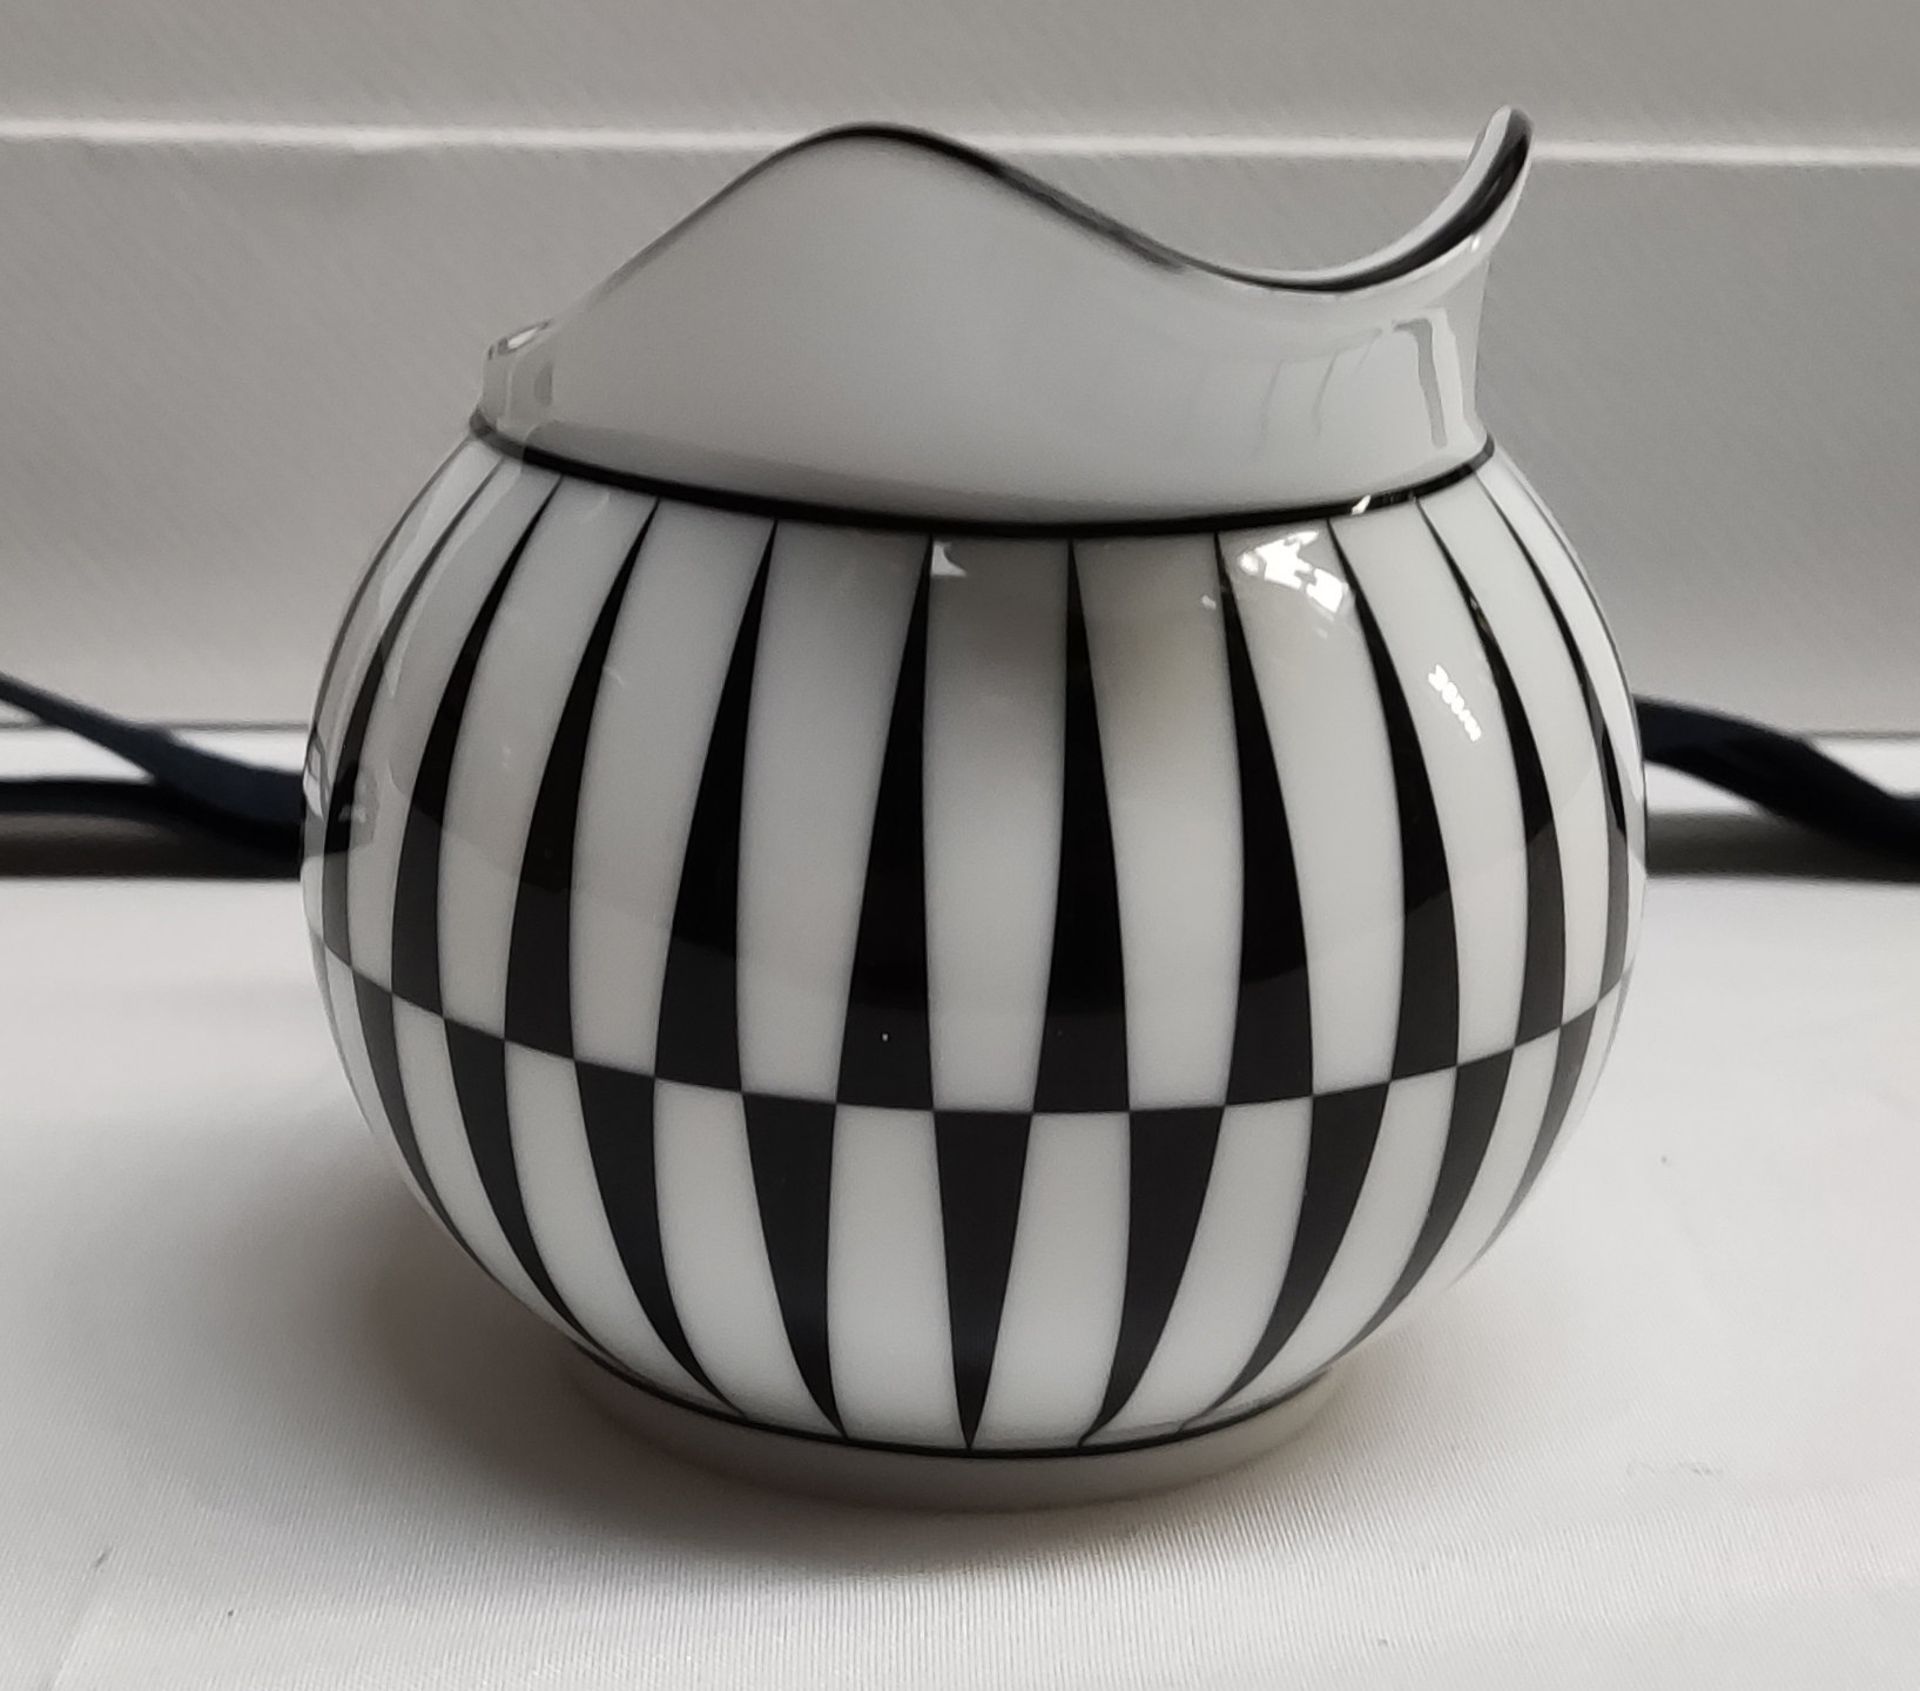 1 x PRADA Porcelain Creamer Jug In Black And White - RRP £360.00 - Image 3 of 20